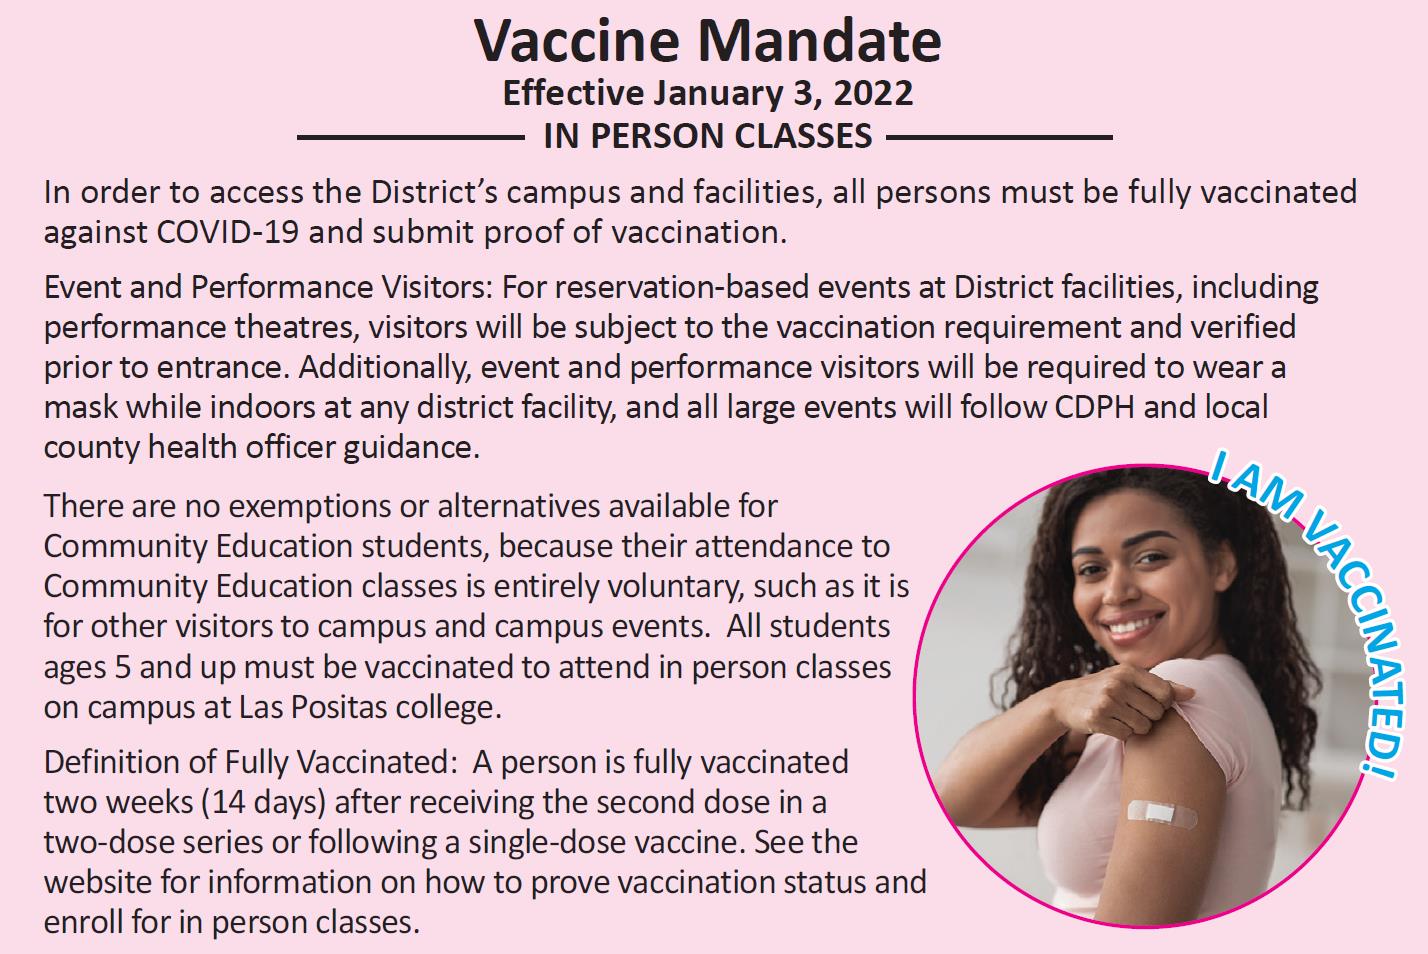 Vaccine mandate information 